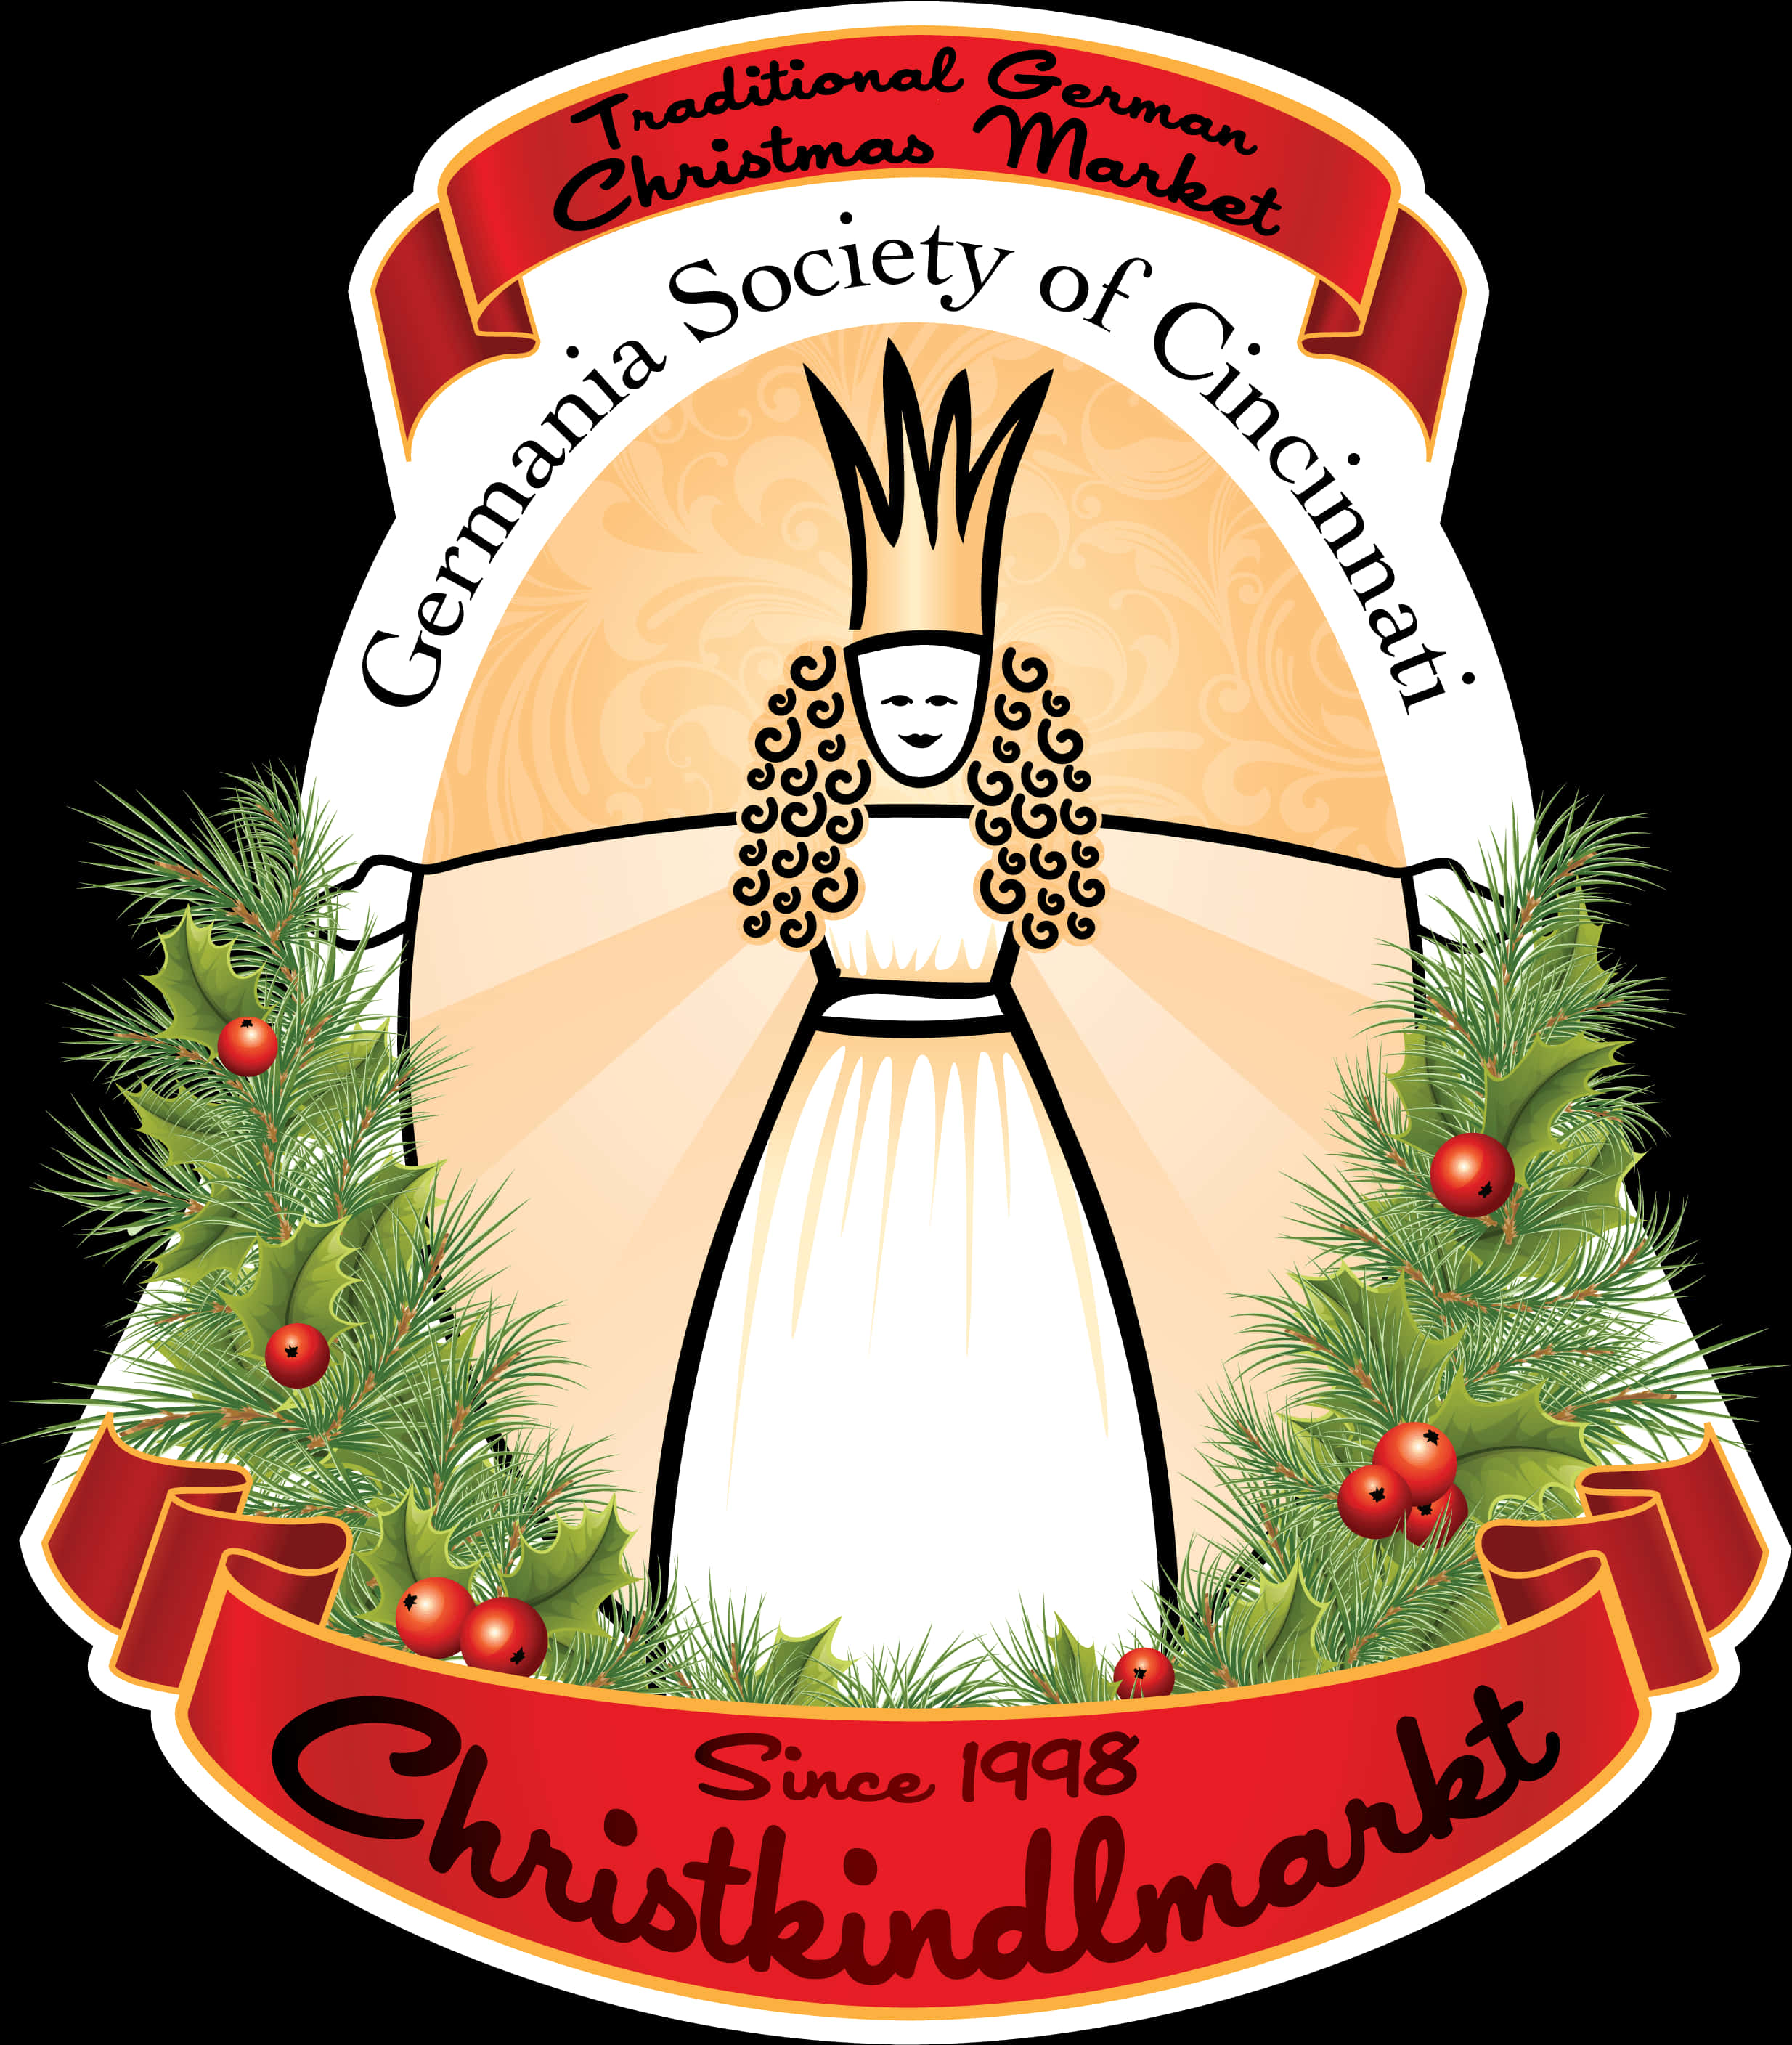 Germania Christkindlmarkt Cincinnati Logo PNG